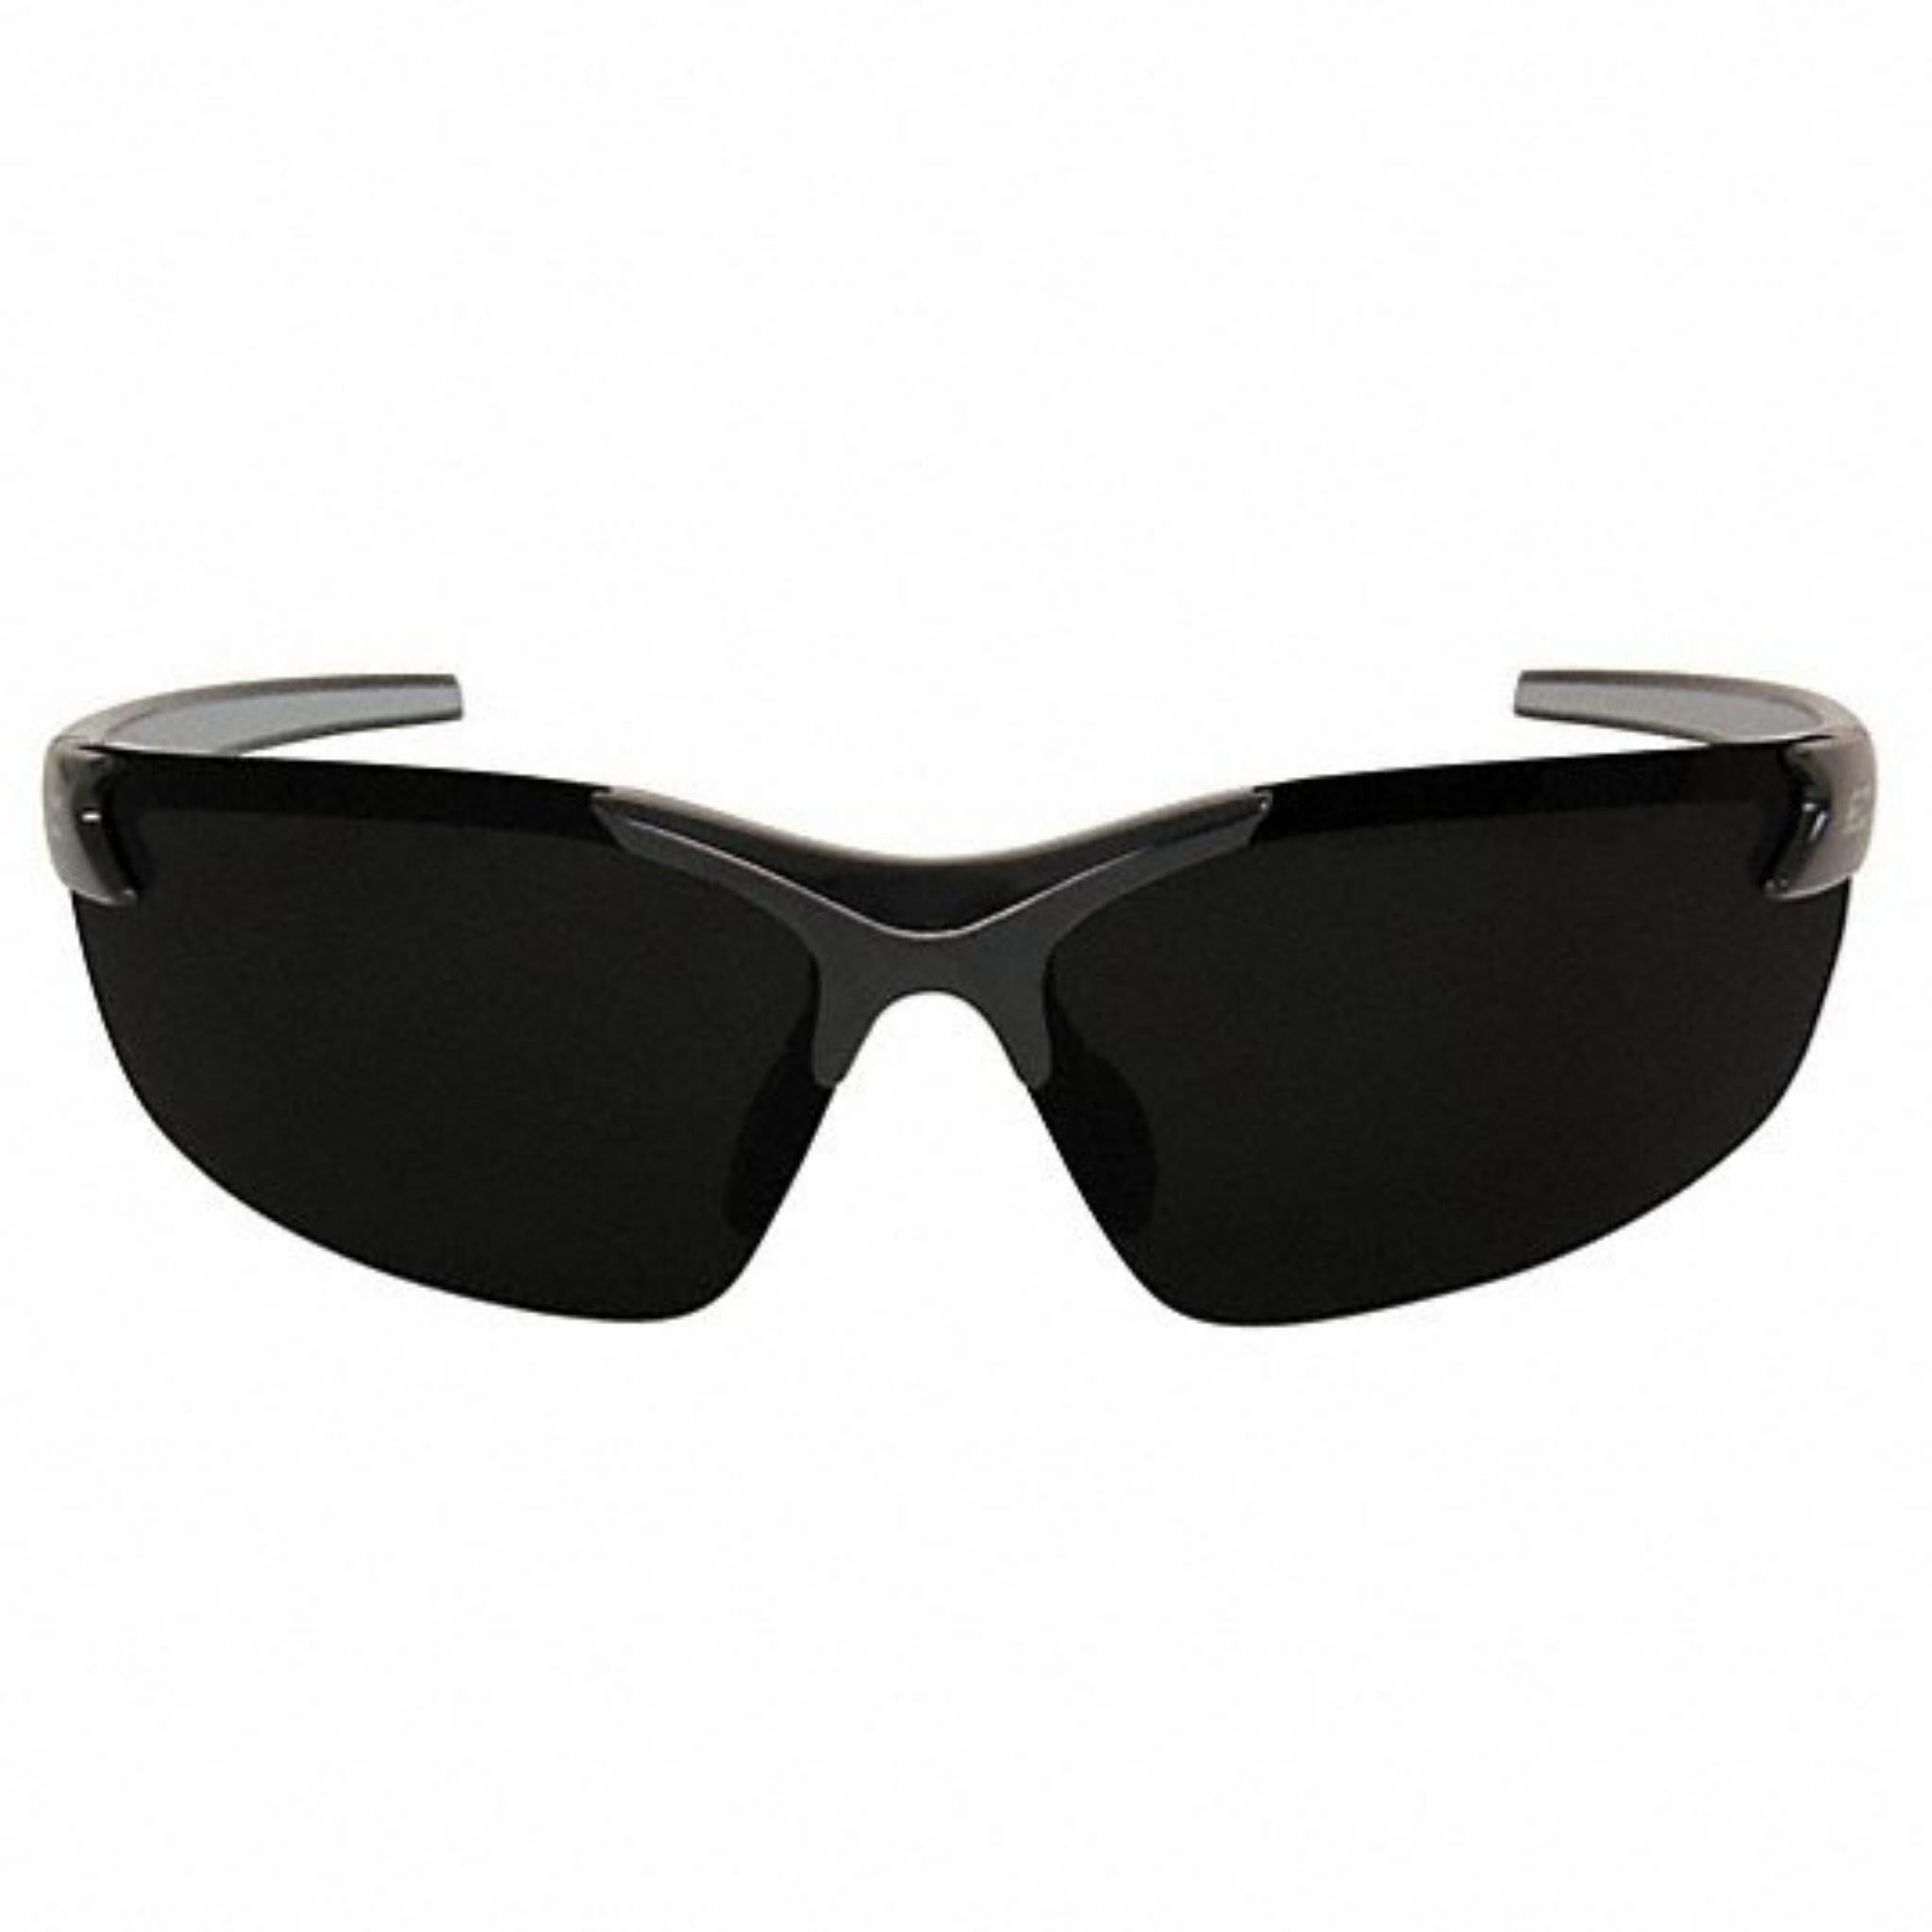 Edge Eyewear DZ116VS-G2 Zorge G2 Safety Glasses, Black Frame, Smoke Vapor Shield Lens